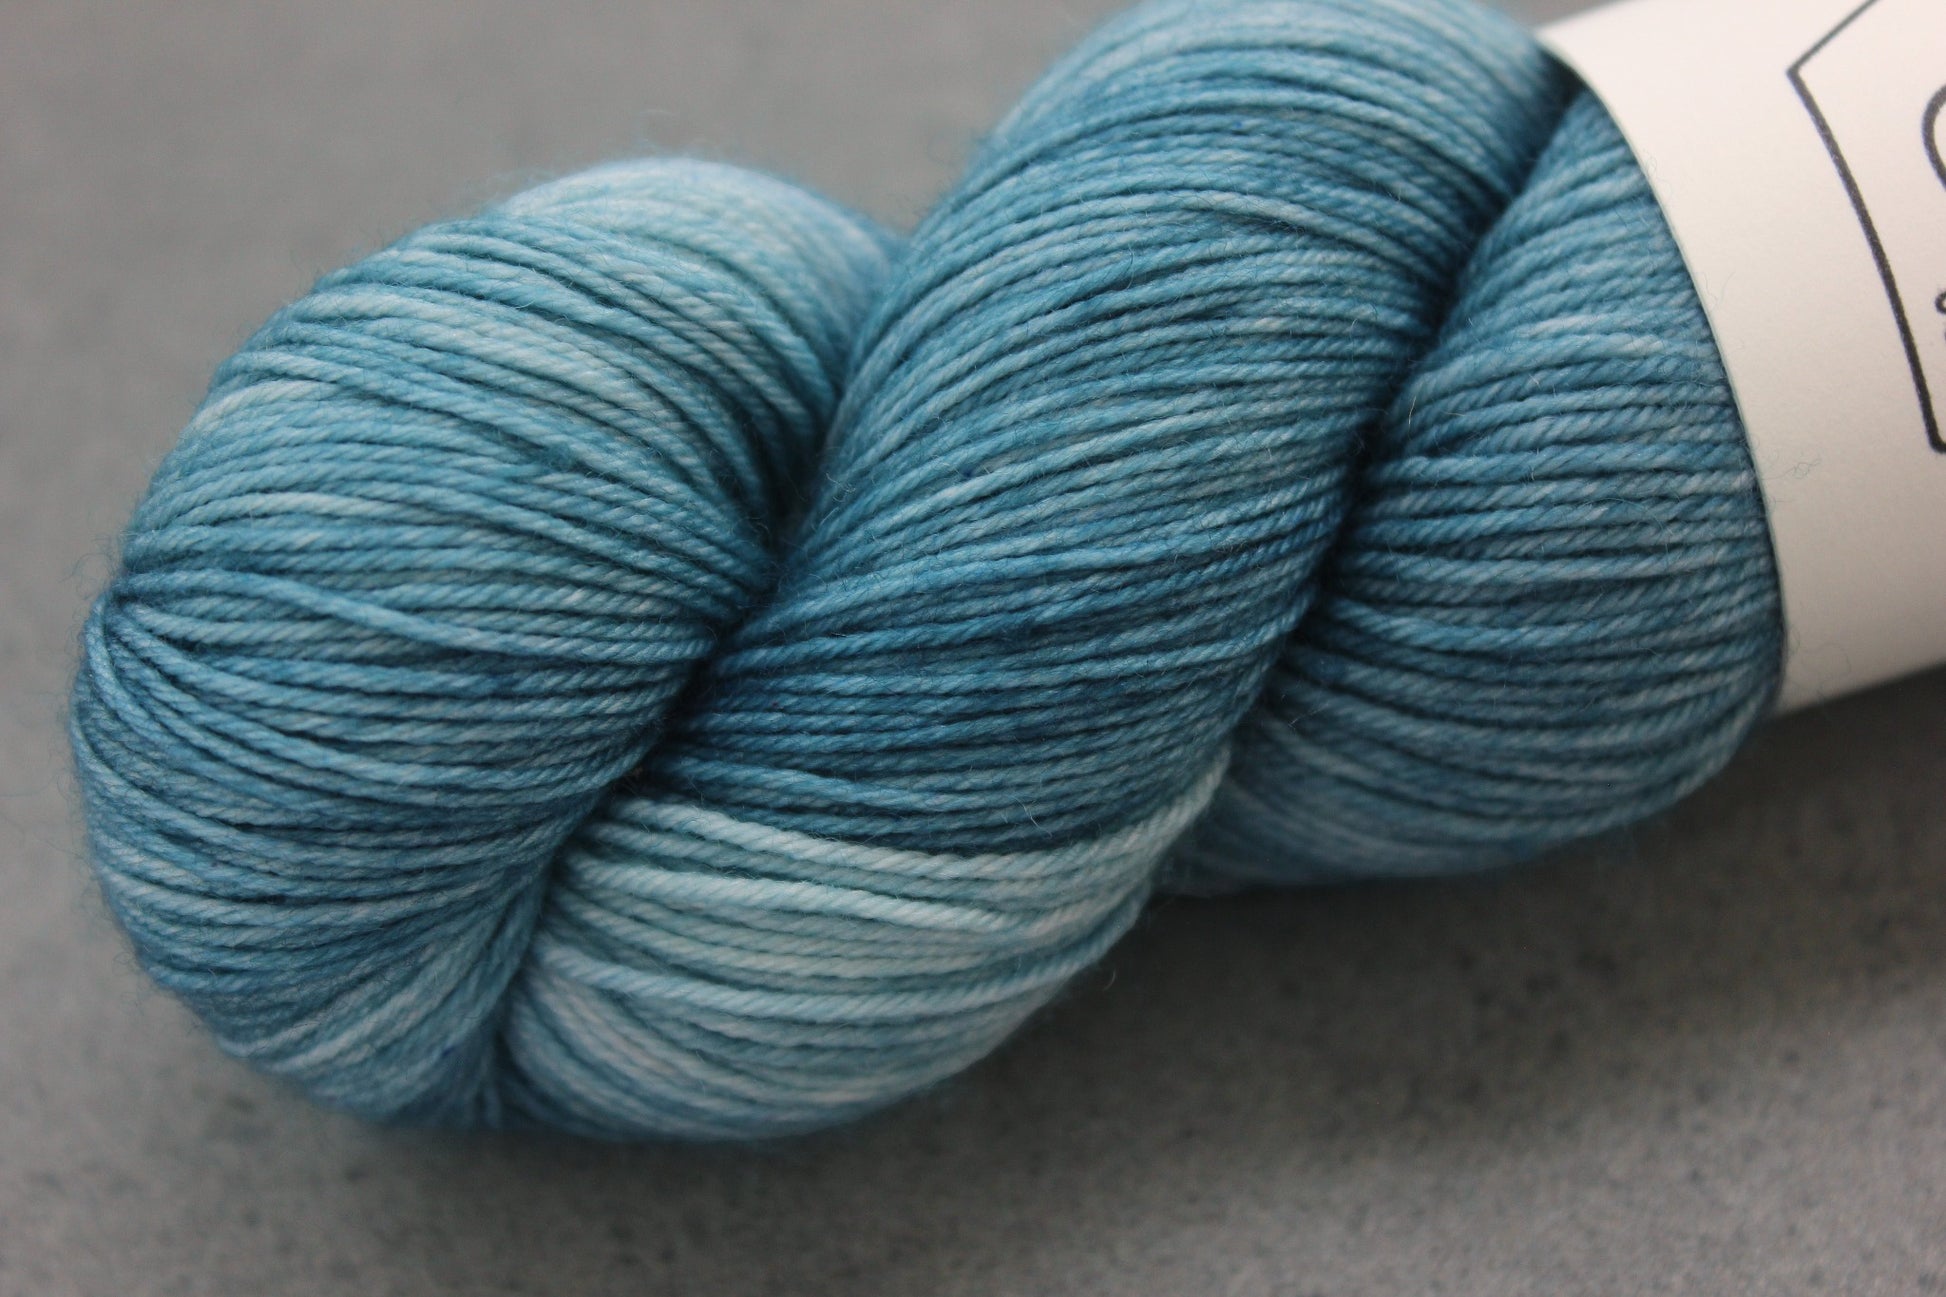 Closeup view of blue Ready, Set, Bake yarn.